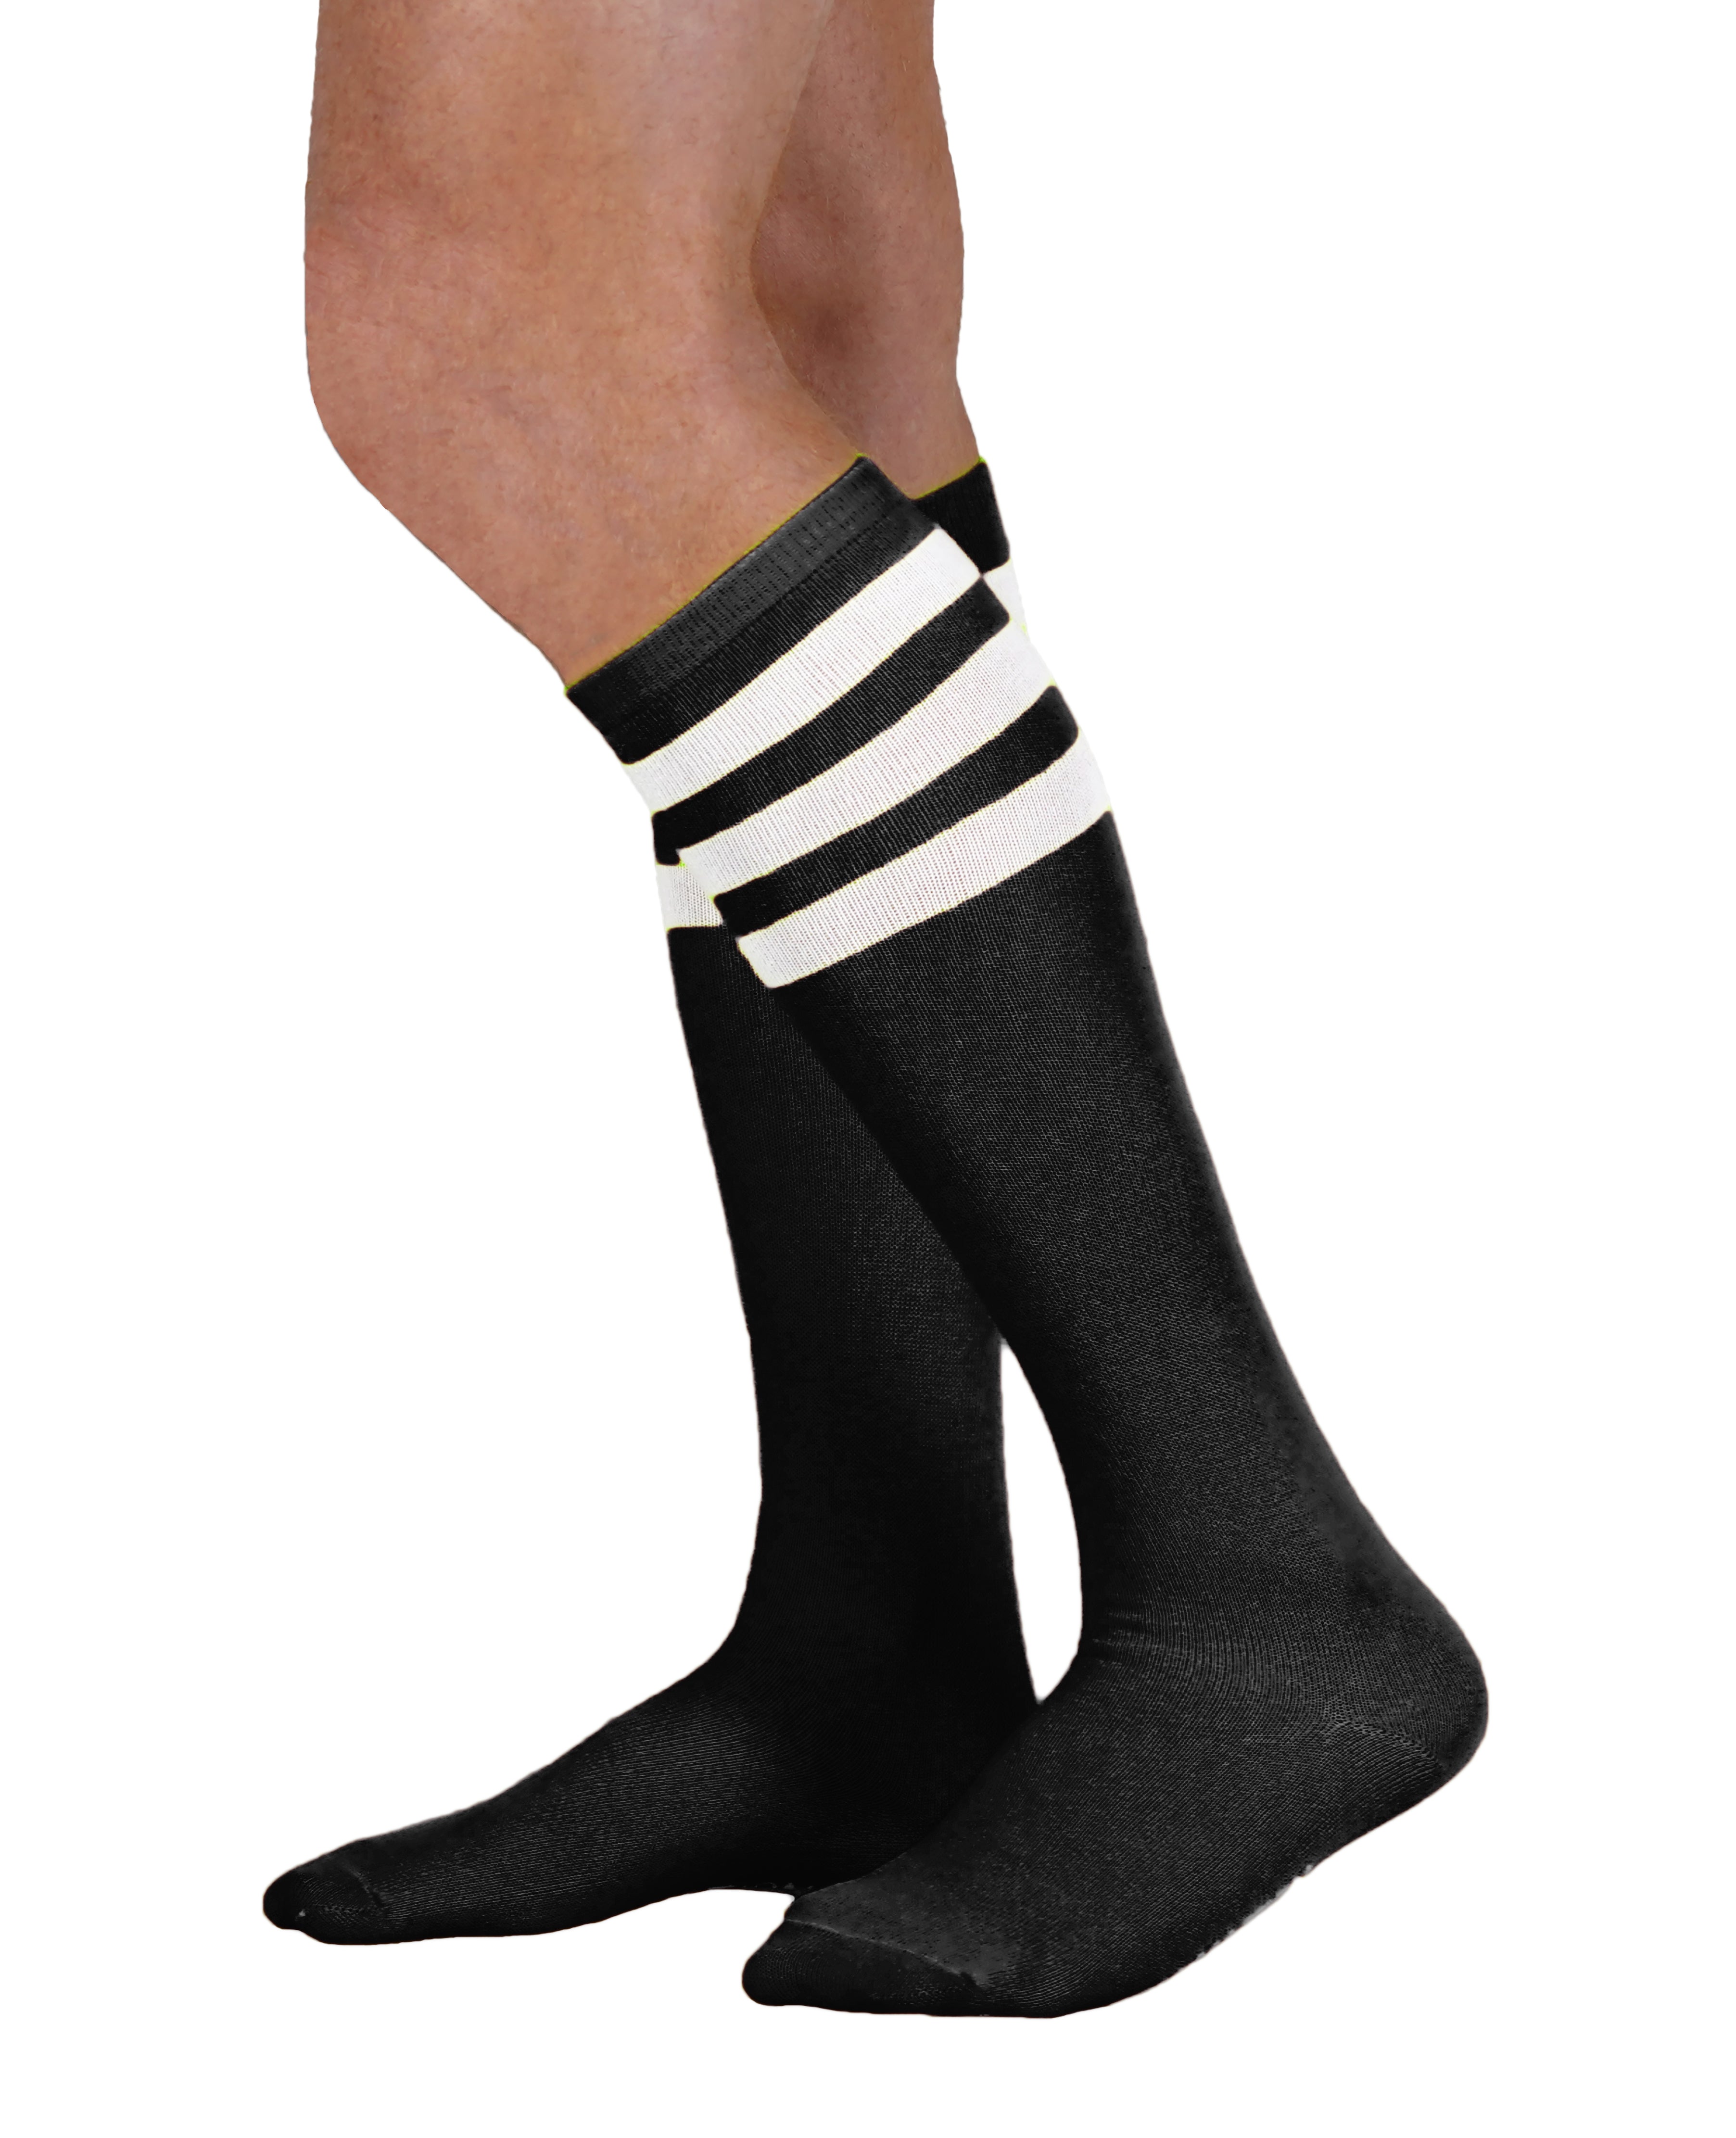 Unisex adult size black knee high tube sock with three white stripes